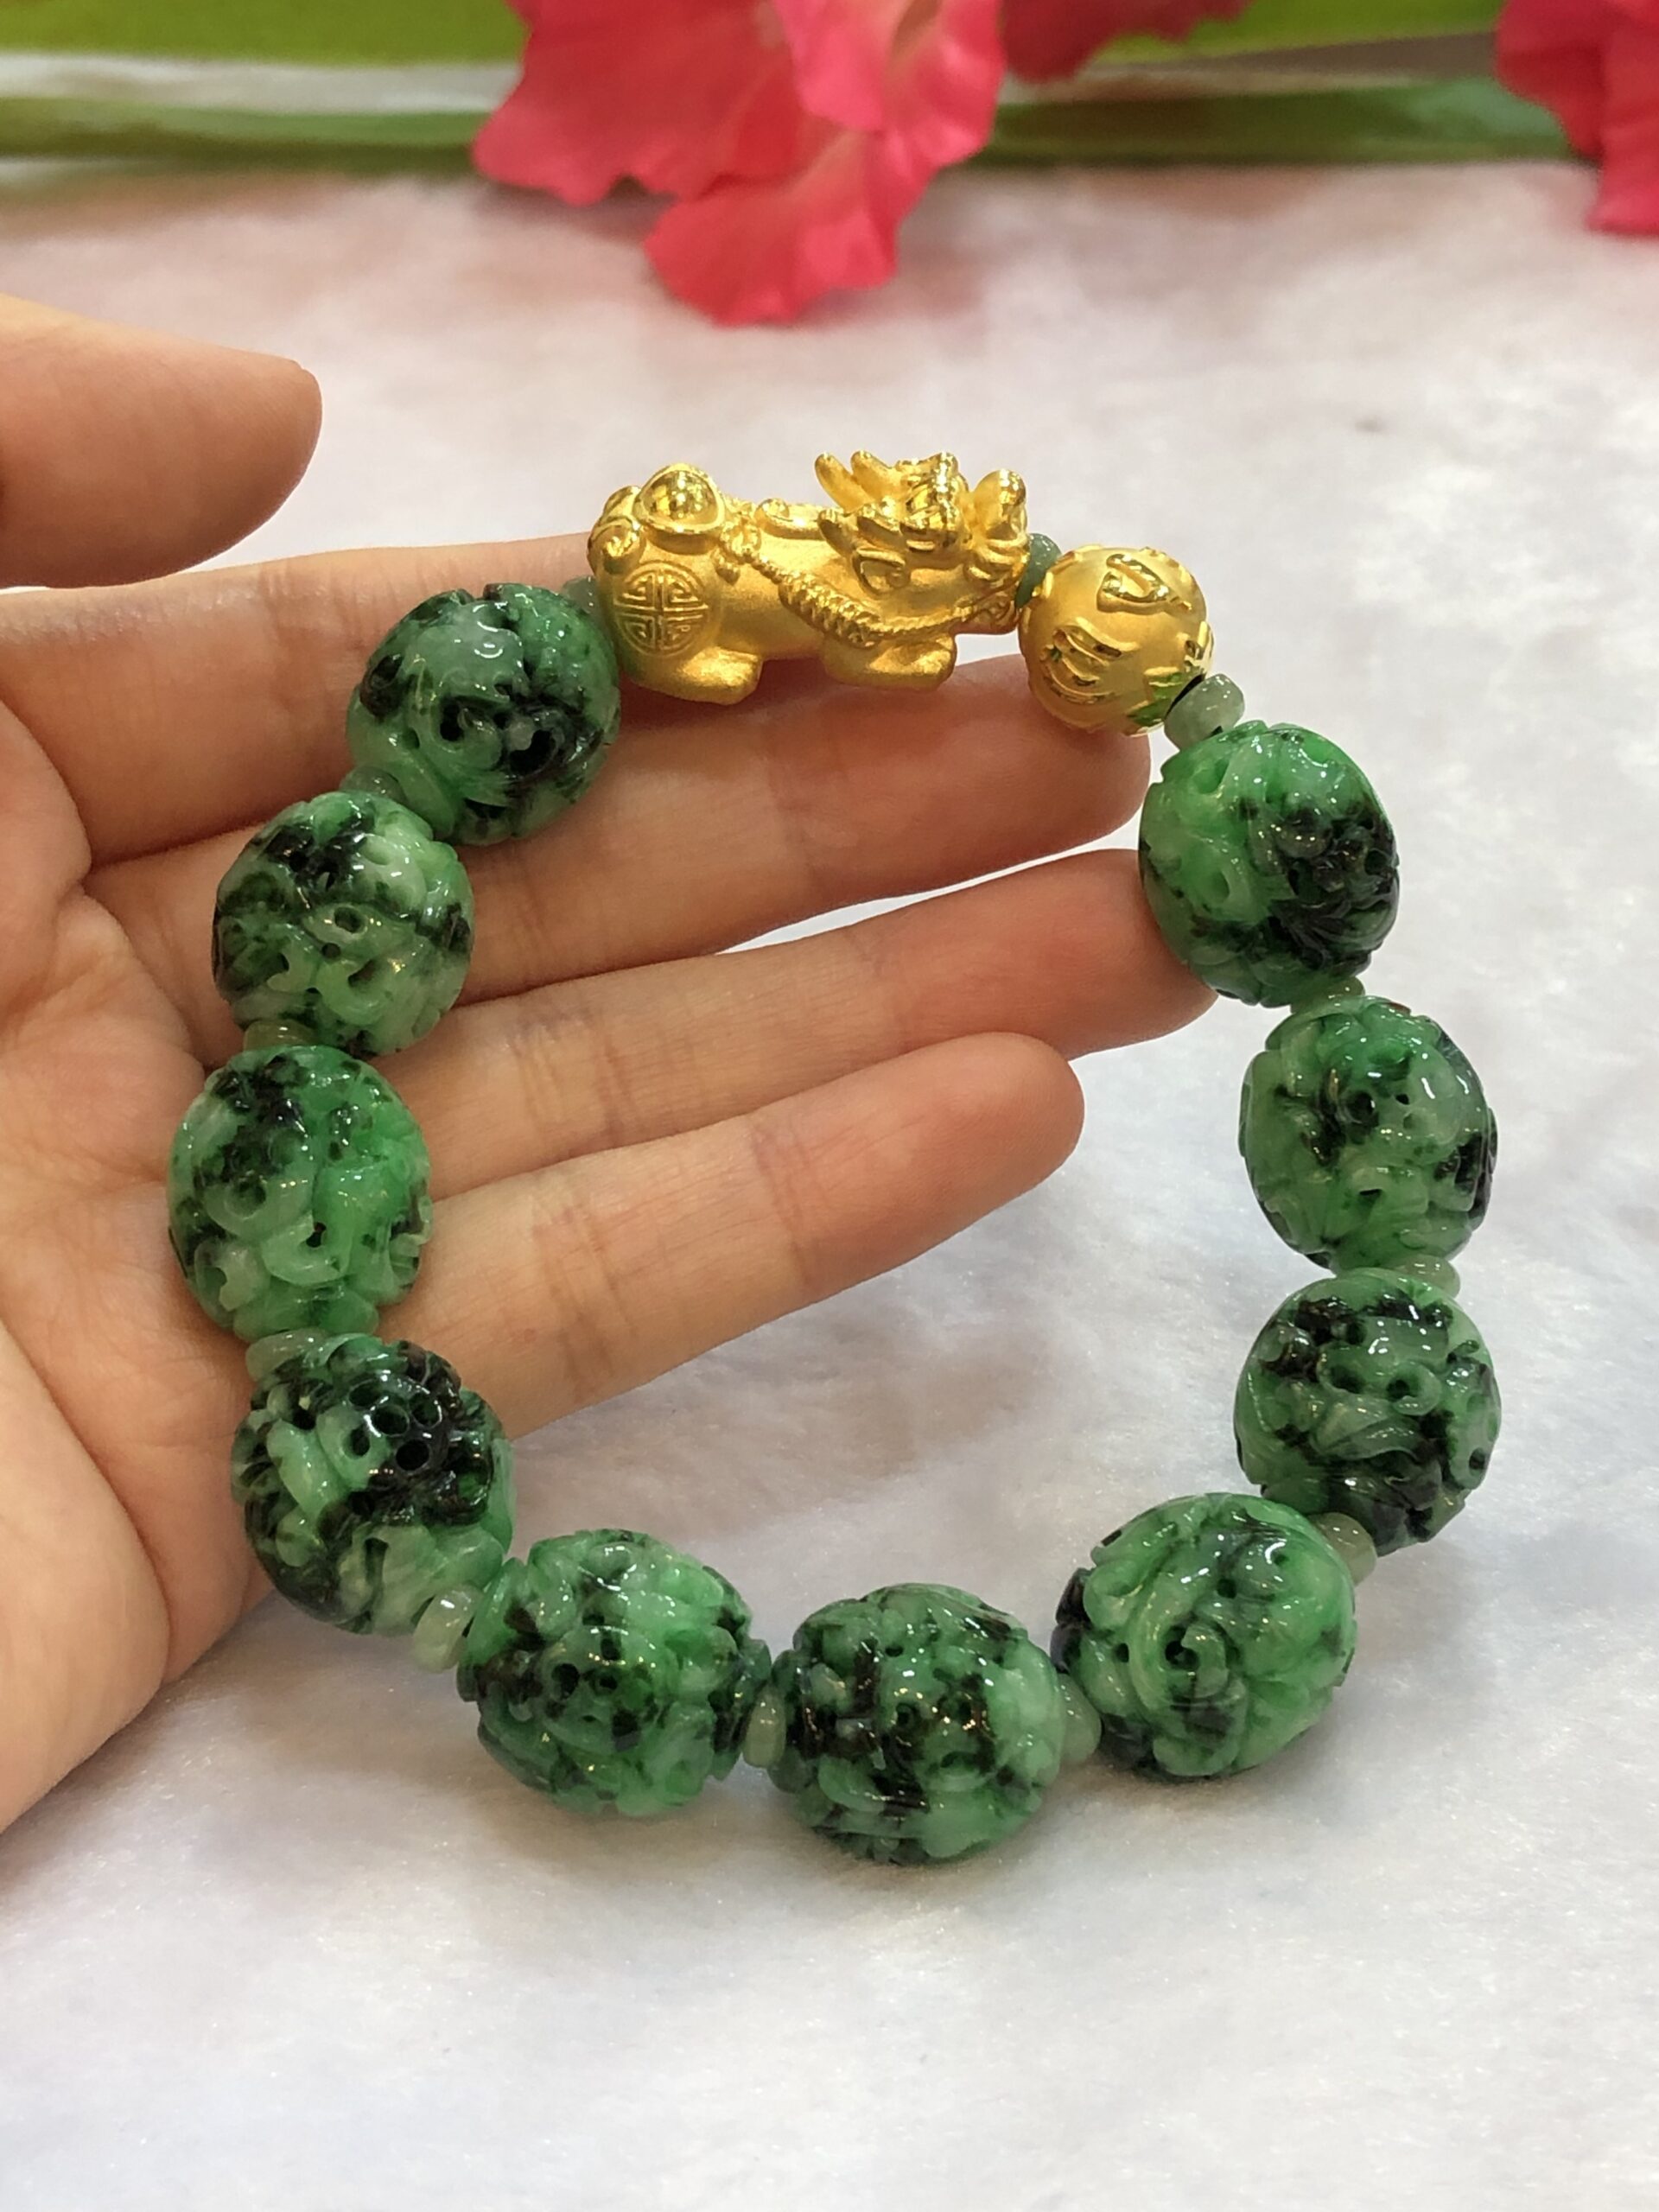 Light Green and White Jadeite Jade Bead Bracelet with 24K Gold Pixiu